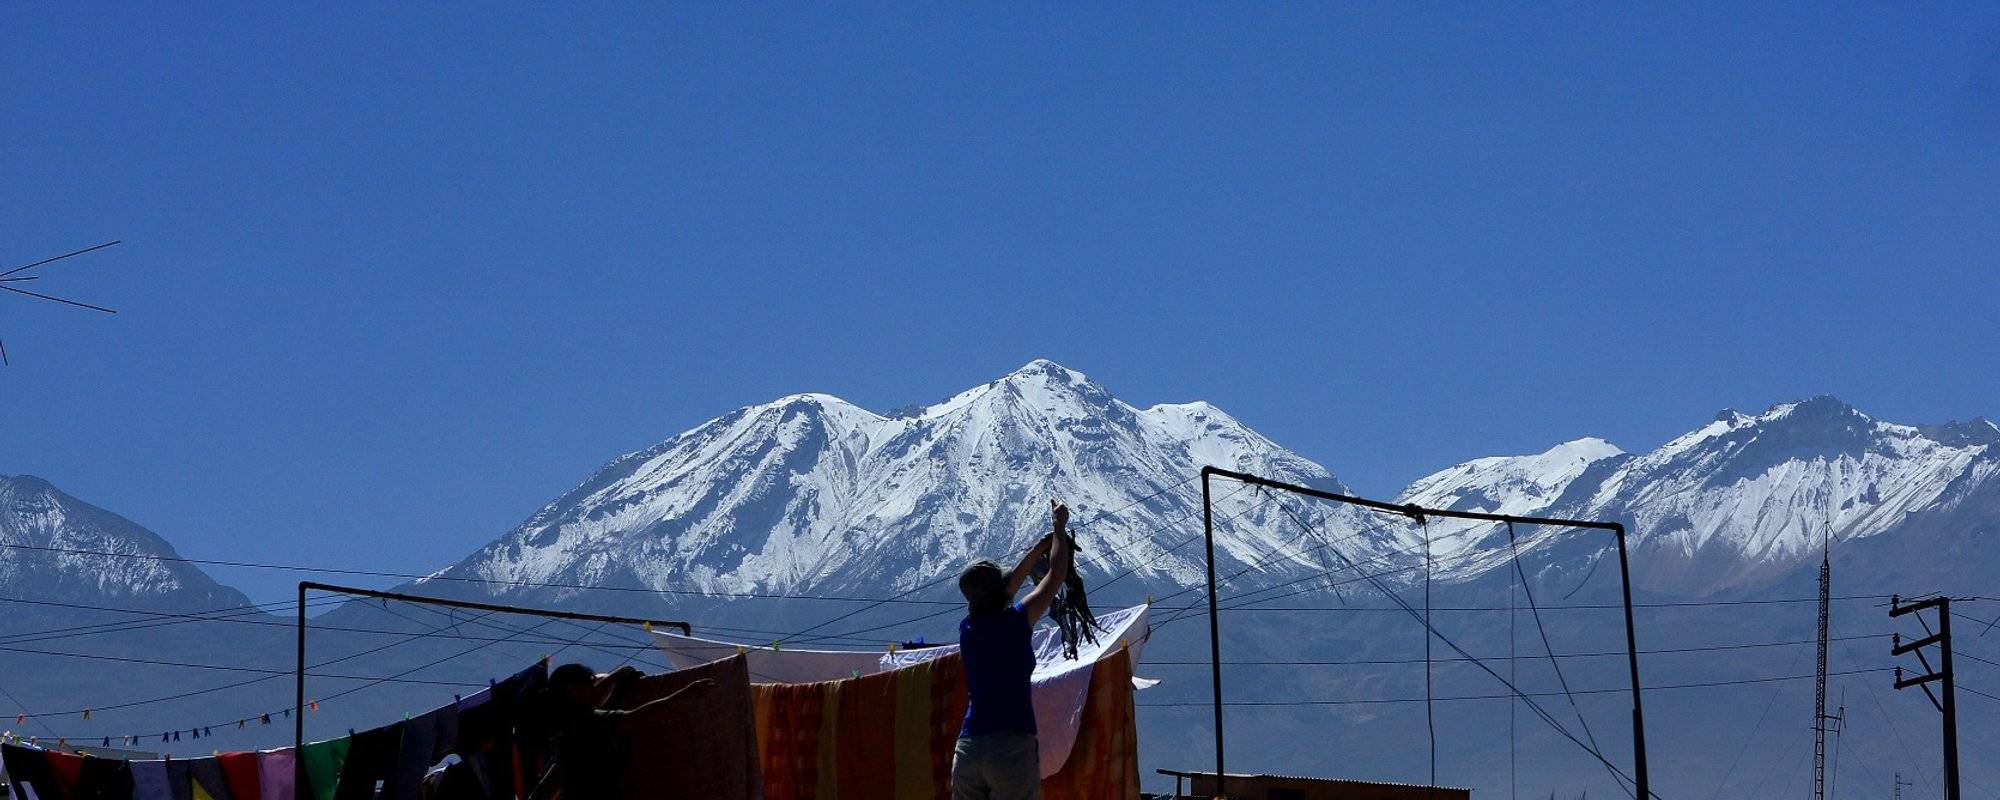 Travel blog Peru Arequipa, Misti volcano through the Andes mountains Salinas height lands!  